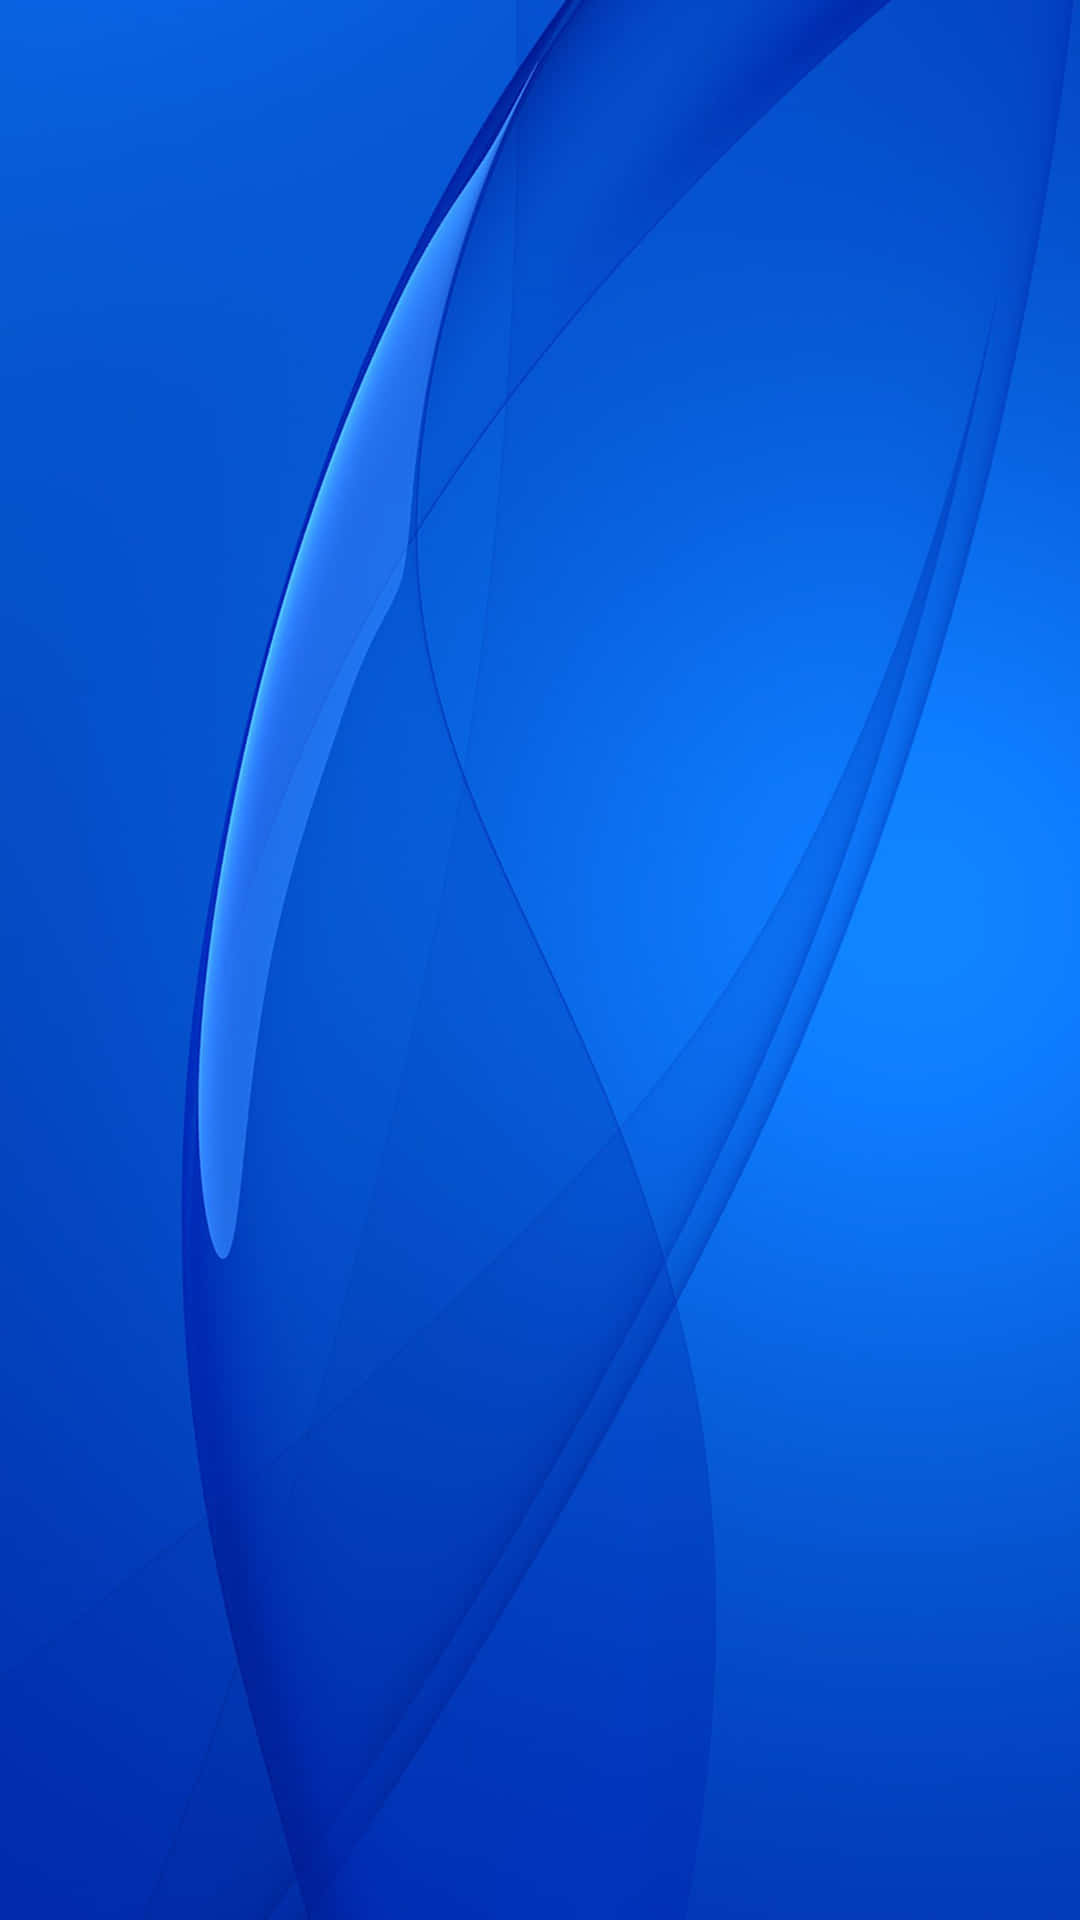 Sleek Blue Smartphone Against A Cool Color-gradient Backdrop